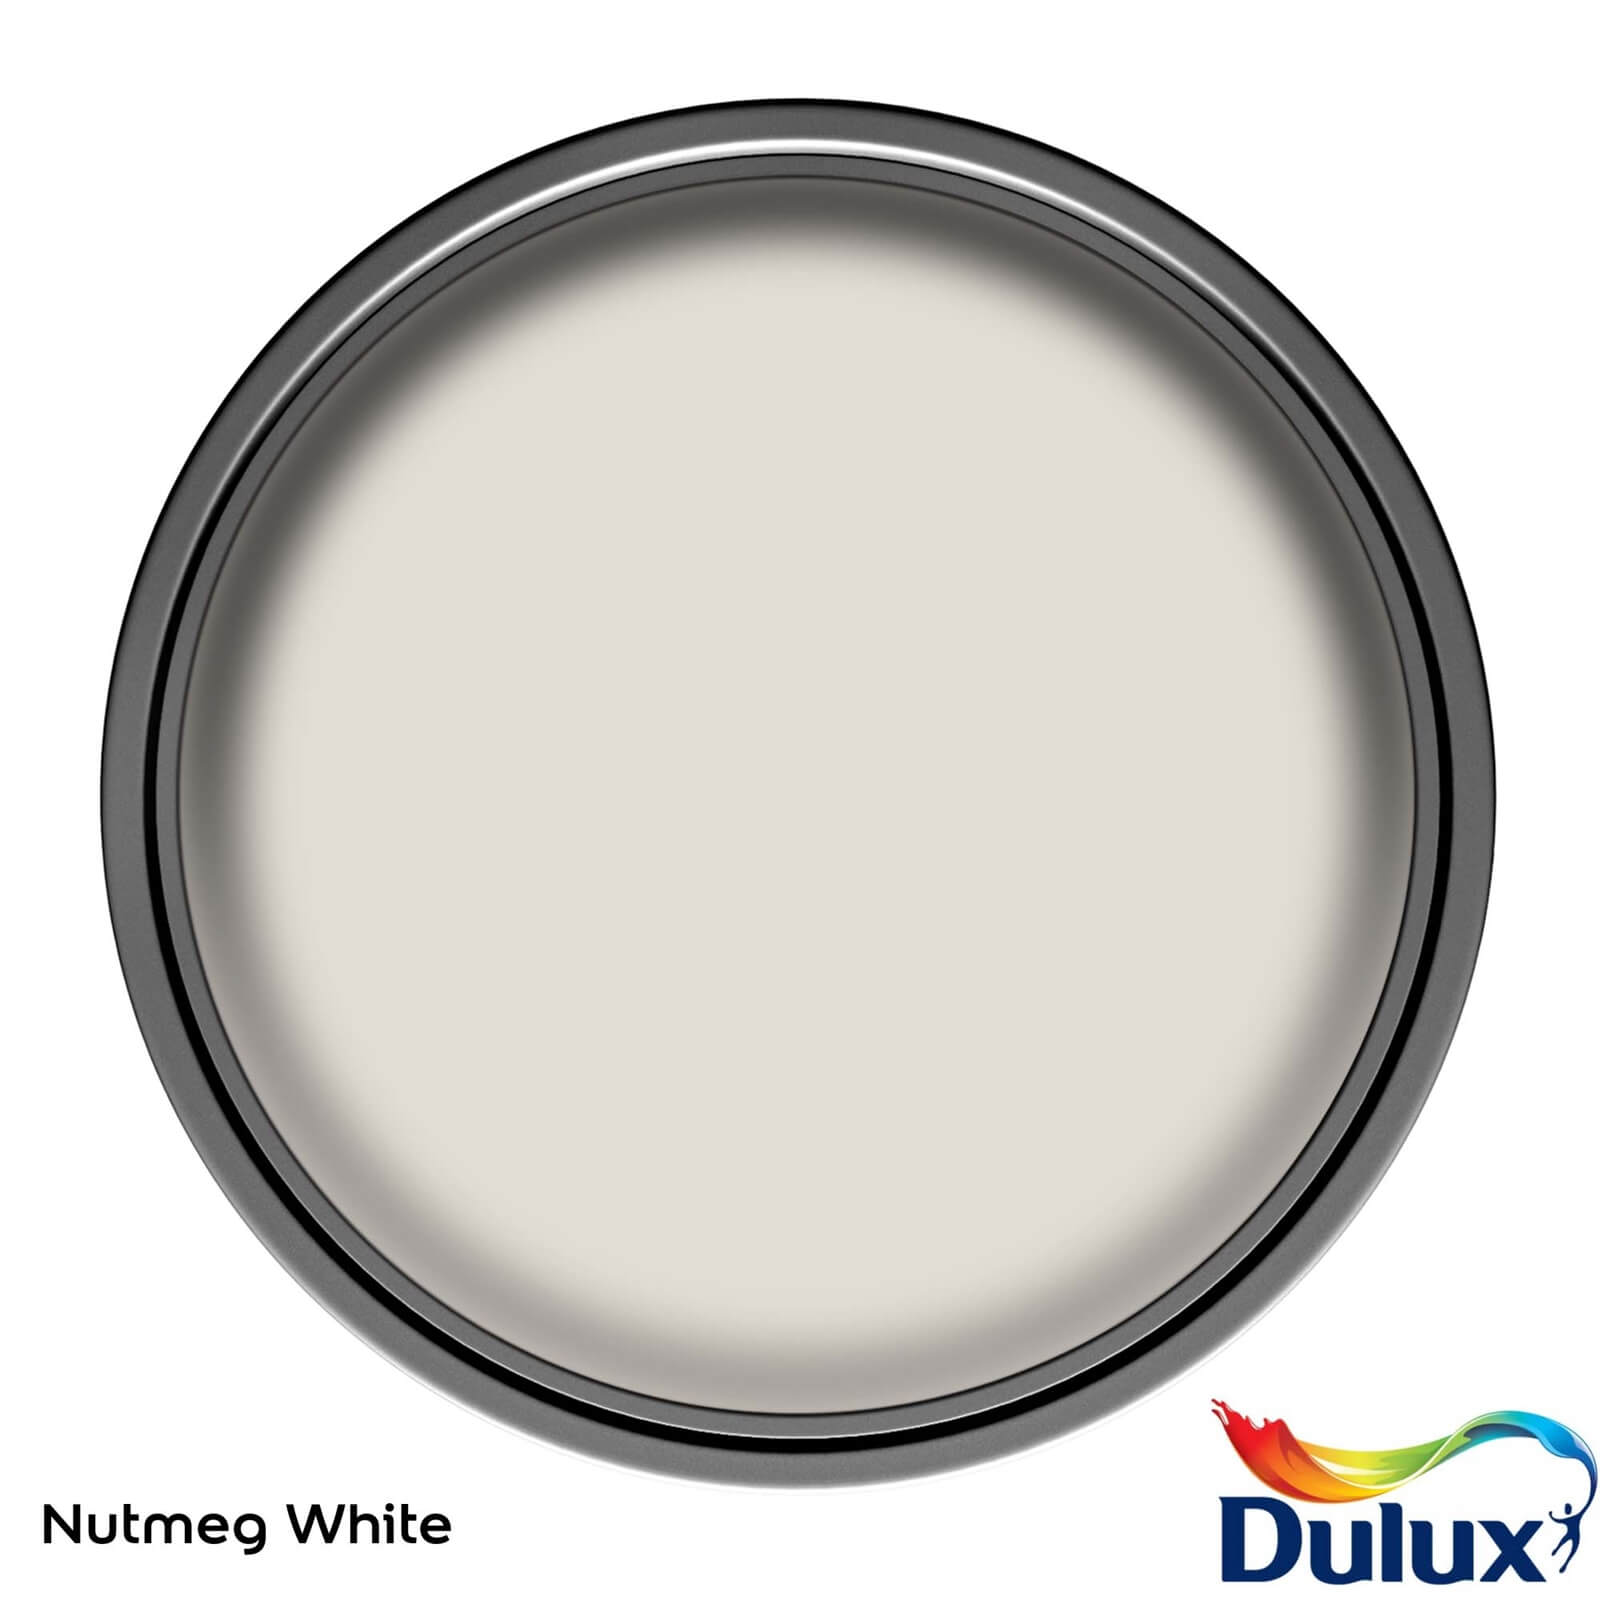 Dulux Natural Hints Matt Emulsion Paint Nutmeg White - 5L